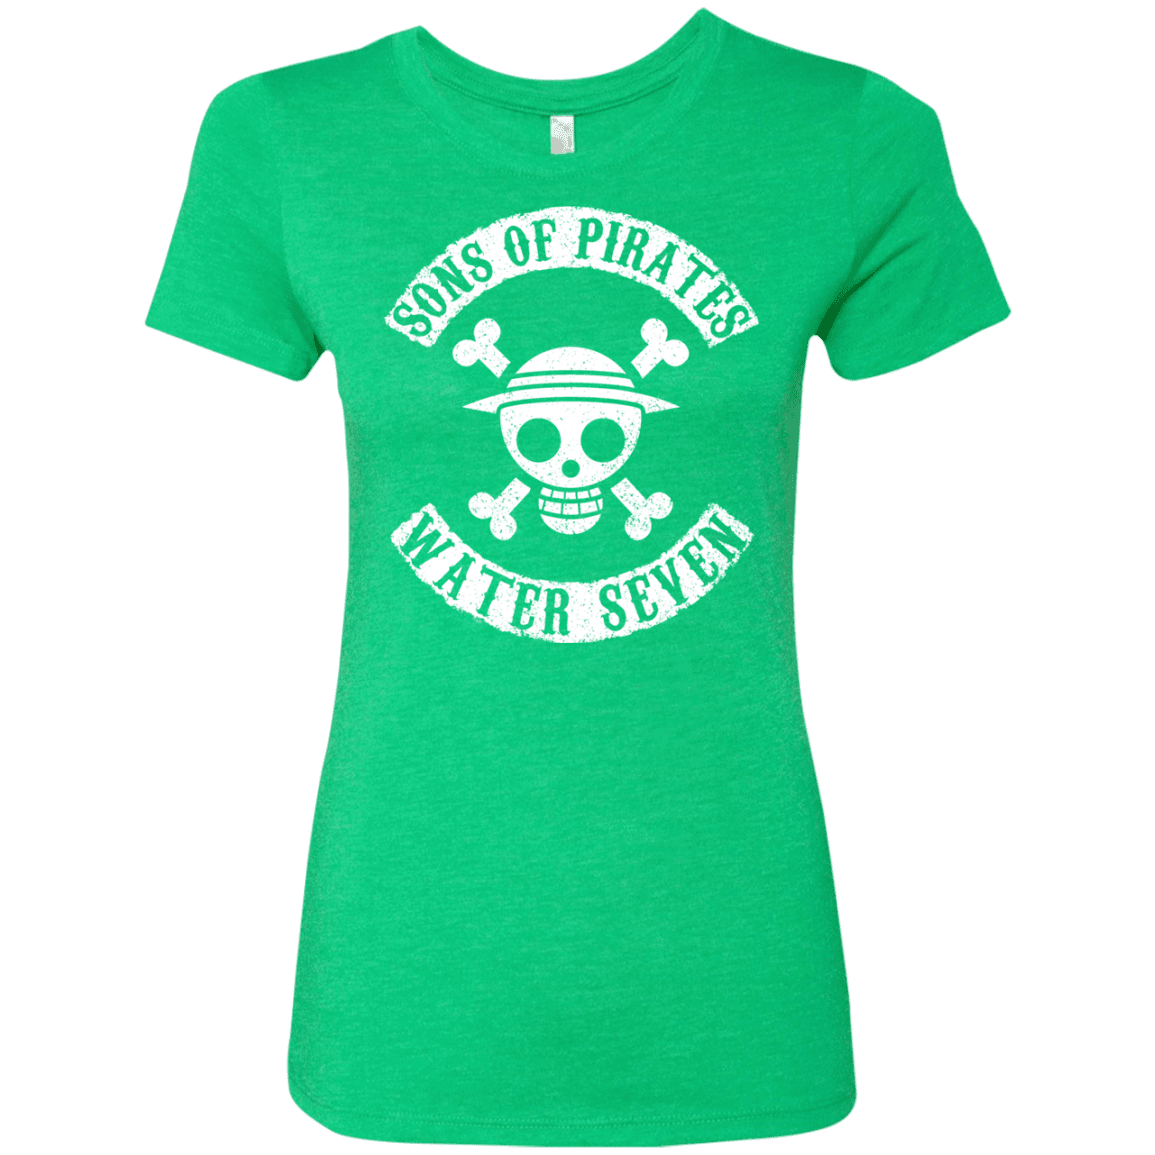 T-Shirts Envy / S Sons of Pirates Women's Triblend T-Shirt